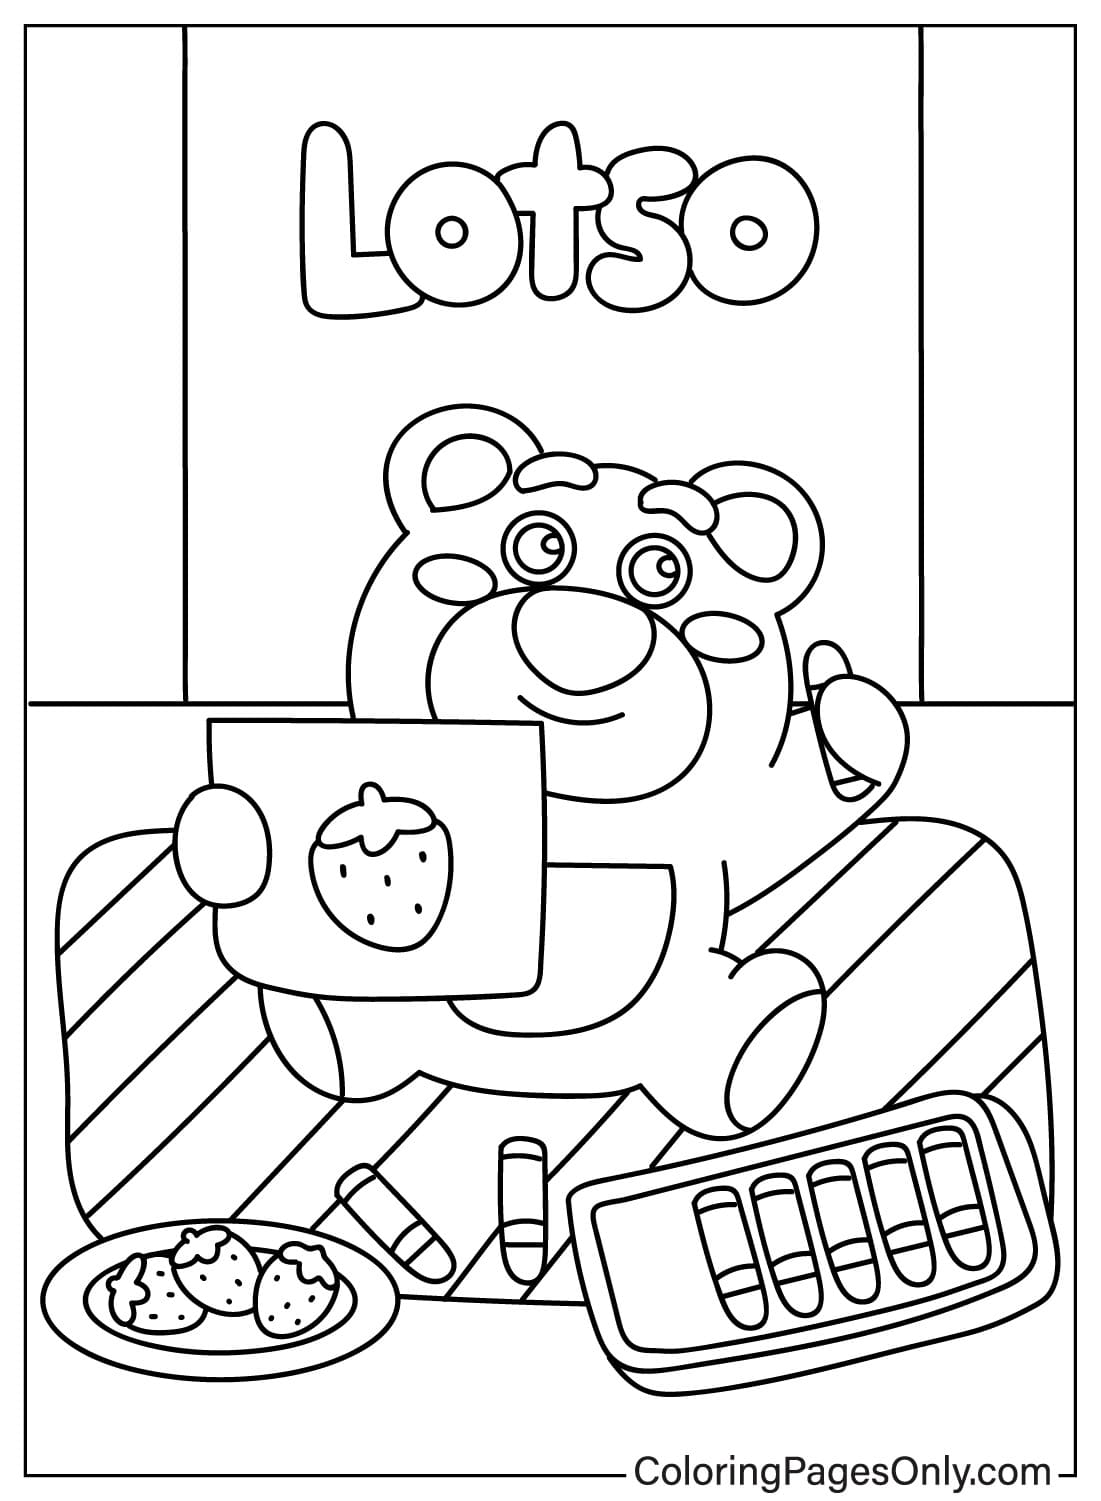 Libro para colorear del oso Lotso del oso Lotso